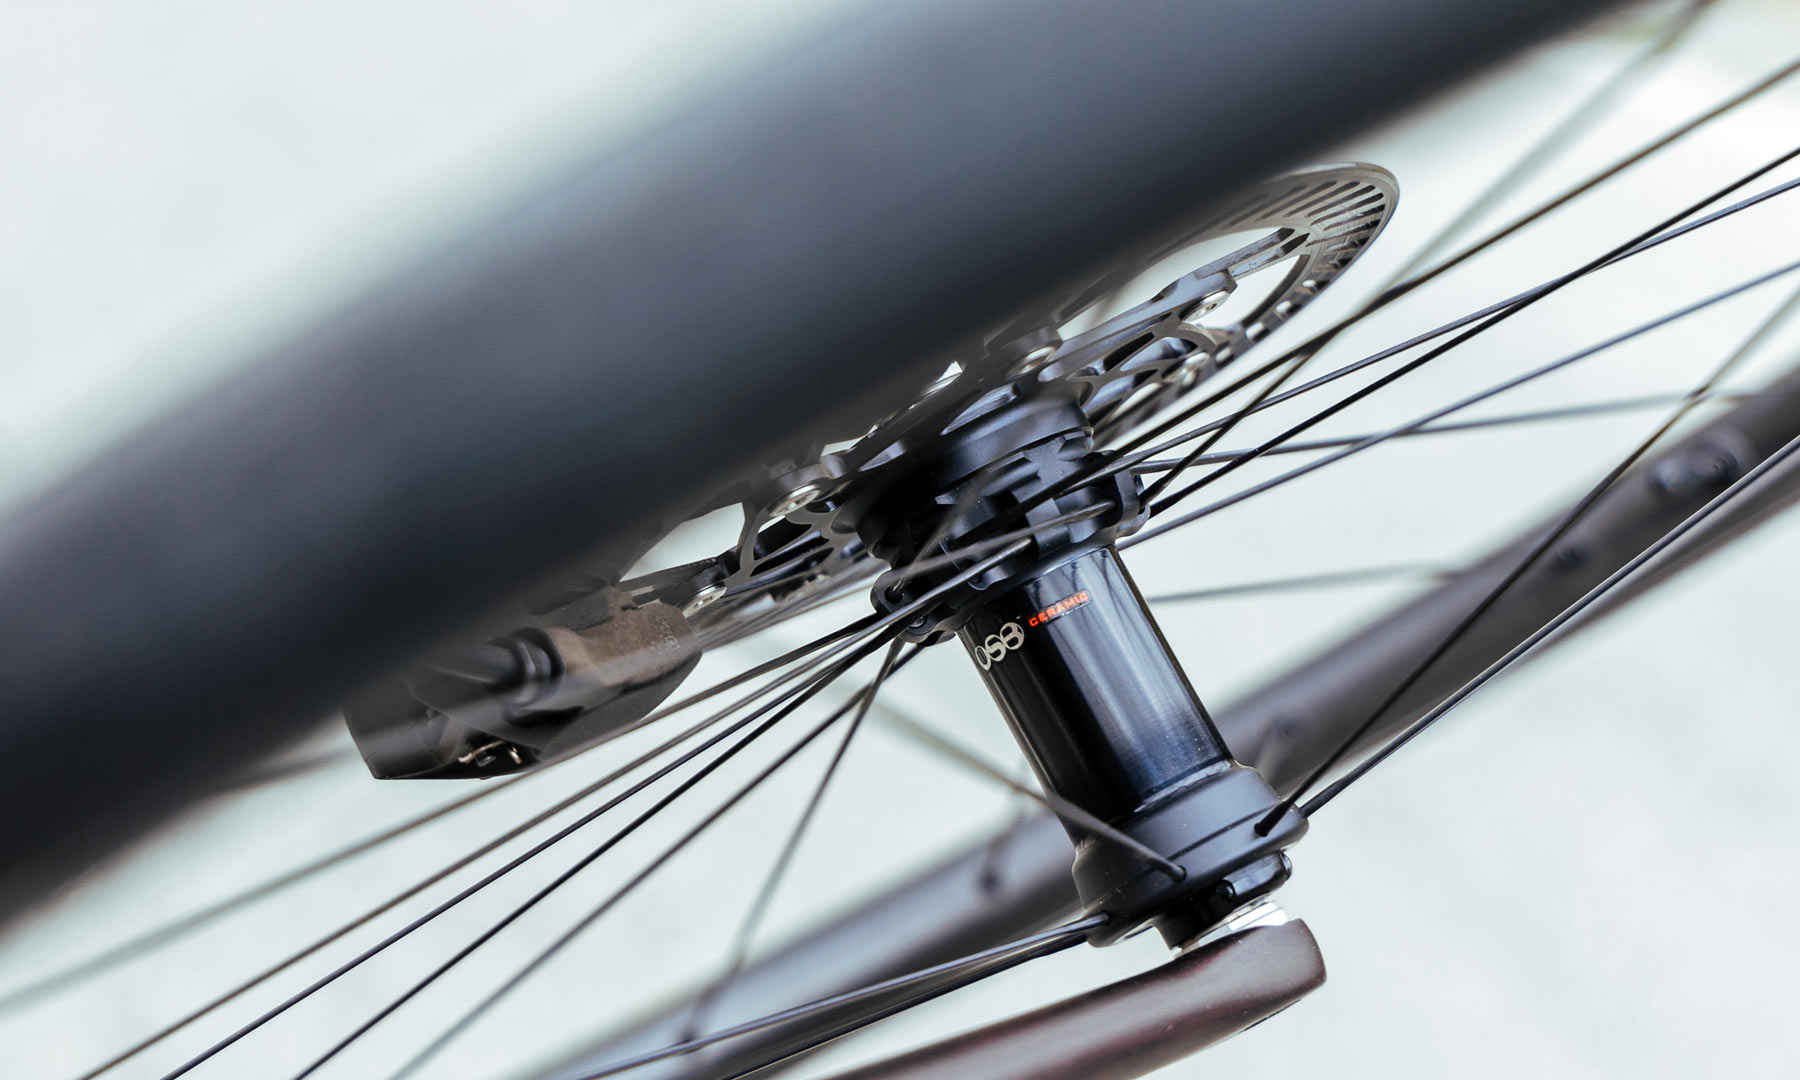 Fulcrum Speed 25 lightweight carbon climber's wheels, USB ceramic bearings